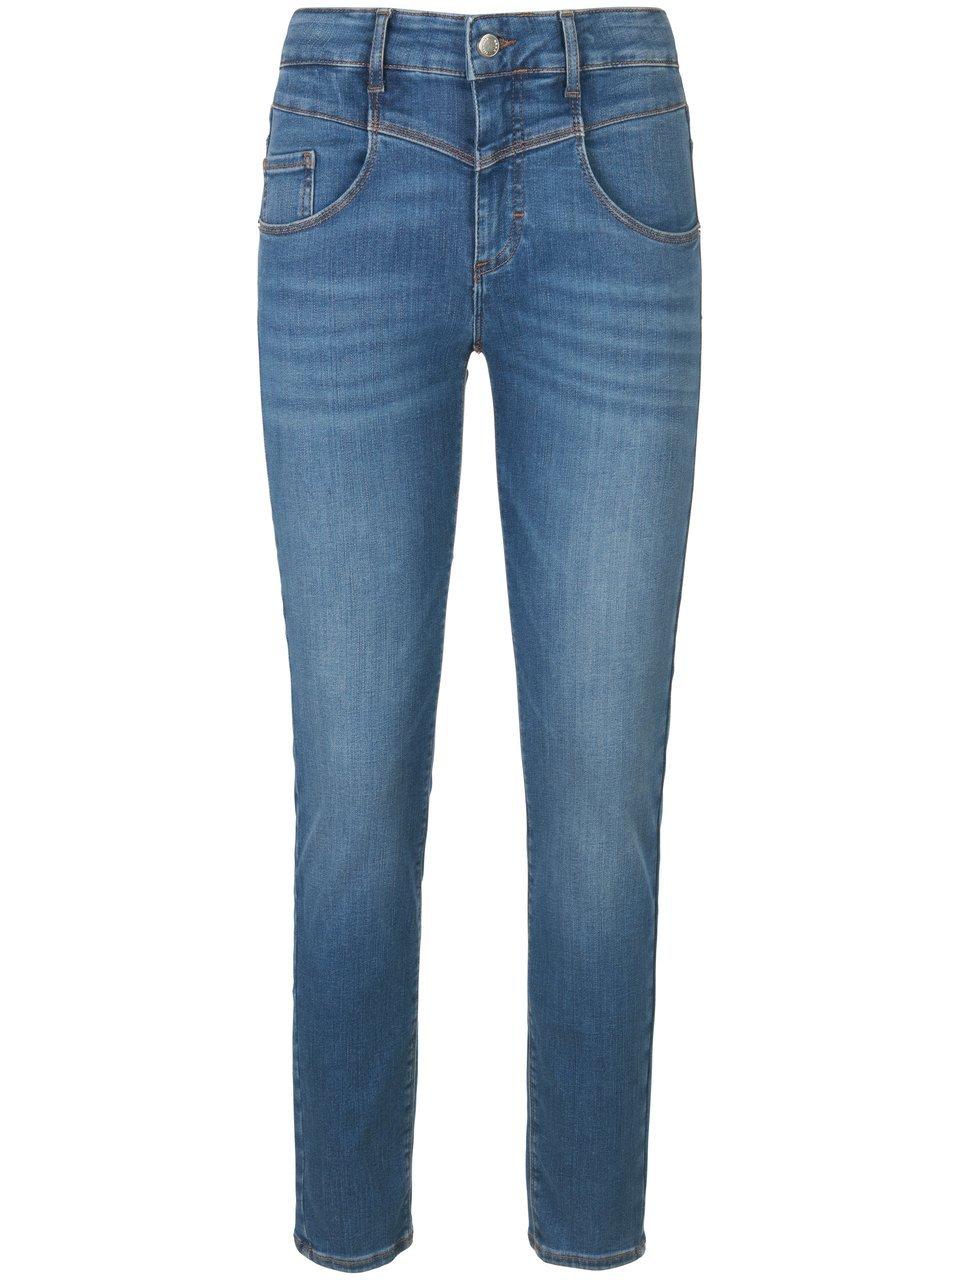 Skinny jeans model Ana Van Brax Feel Good denim